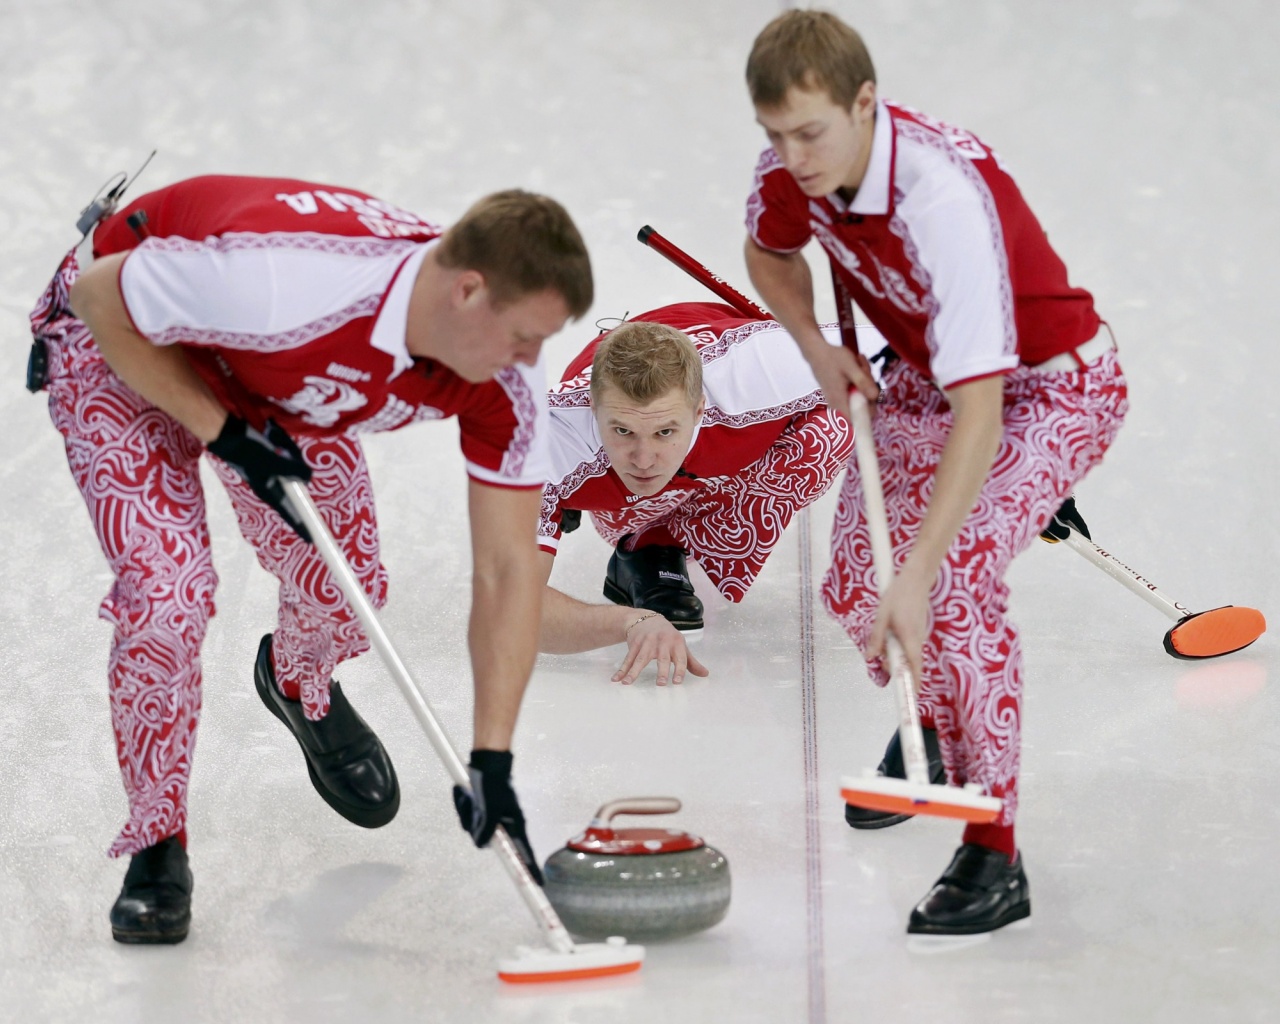 Russian Curling Team In Sochi 2014